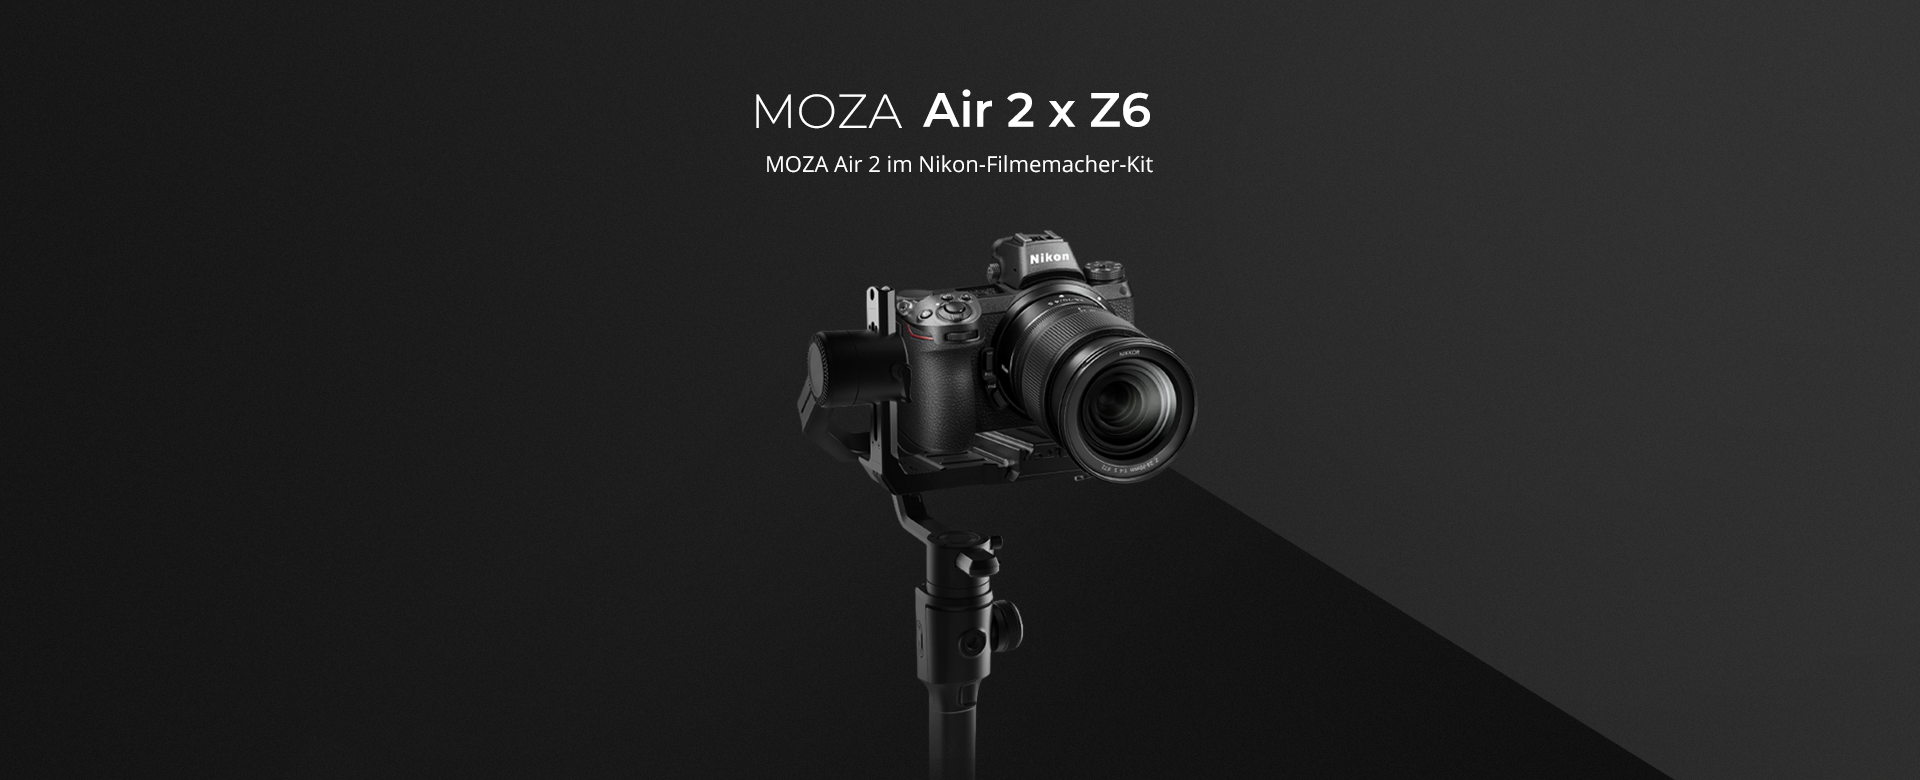 MOZA Air 2 im Nikon-Filmemacher-Kit